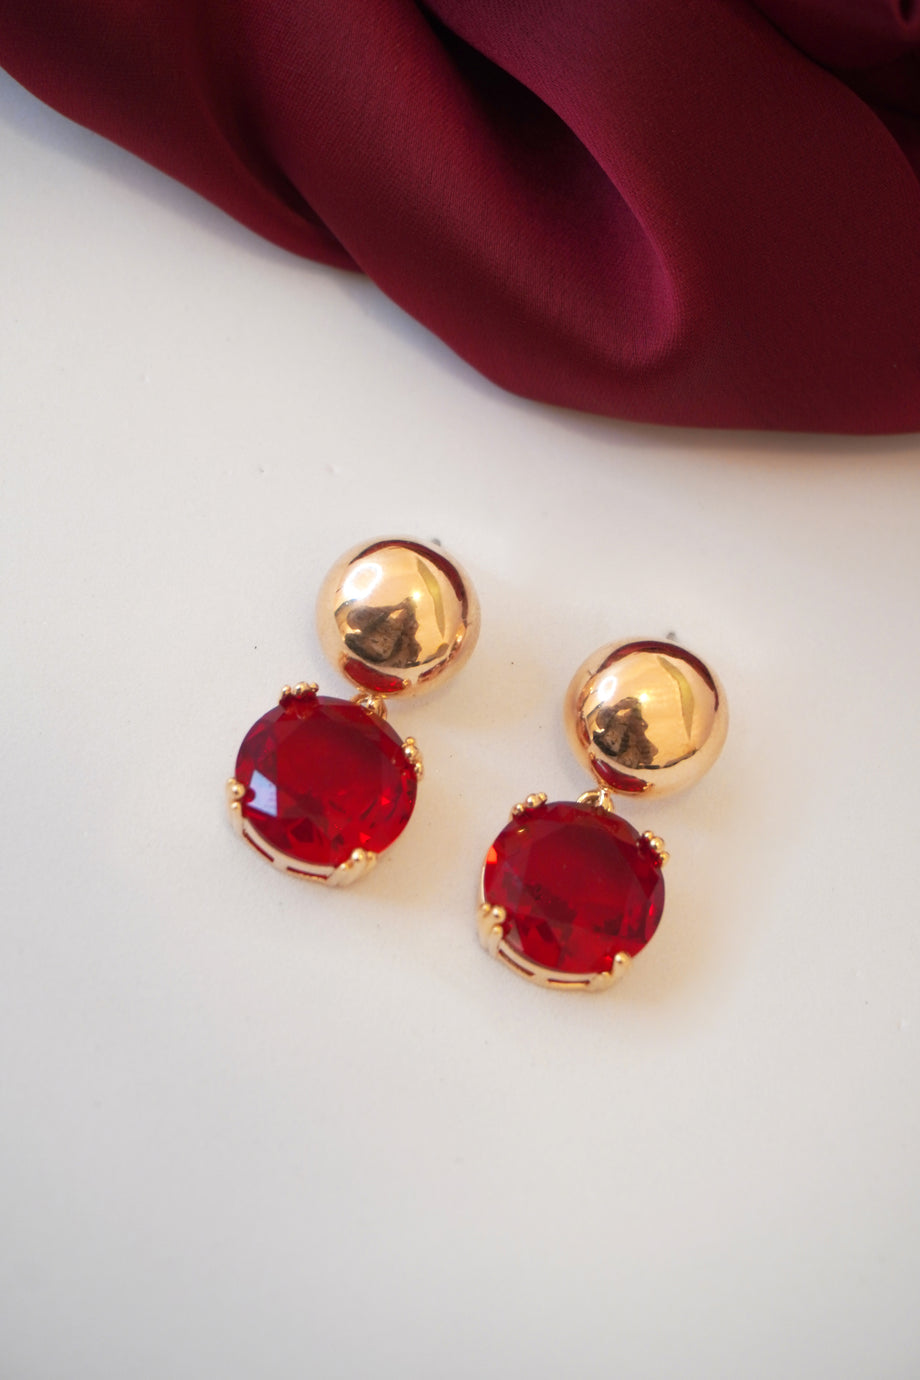 Buy 8mm Round Golden CZ Stud Earrings: Gems By Deni | Gems and Settings  Below Wholesale!